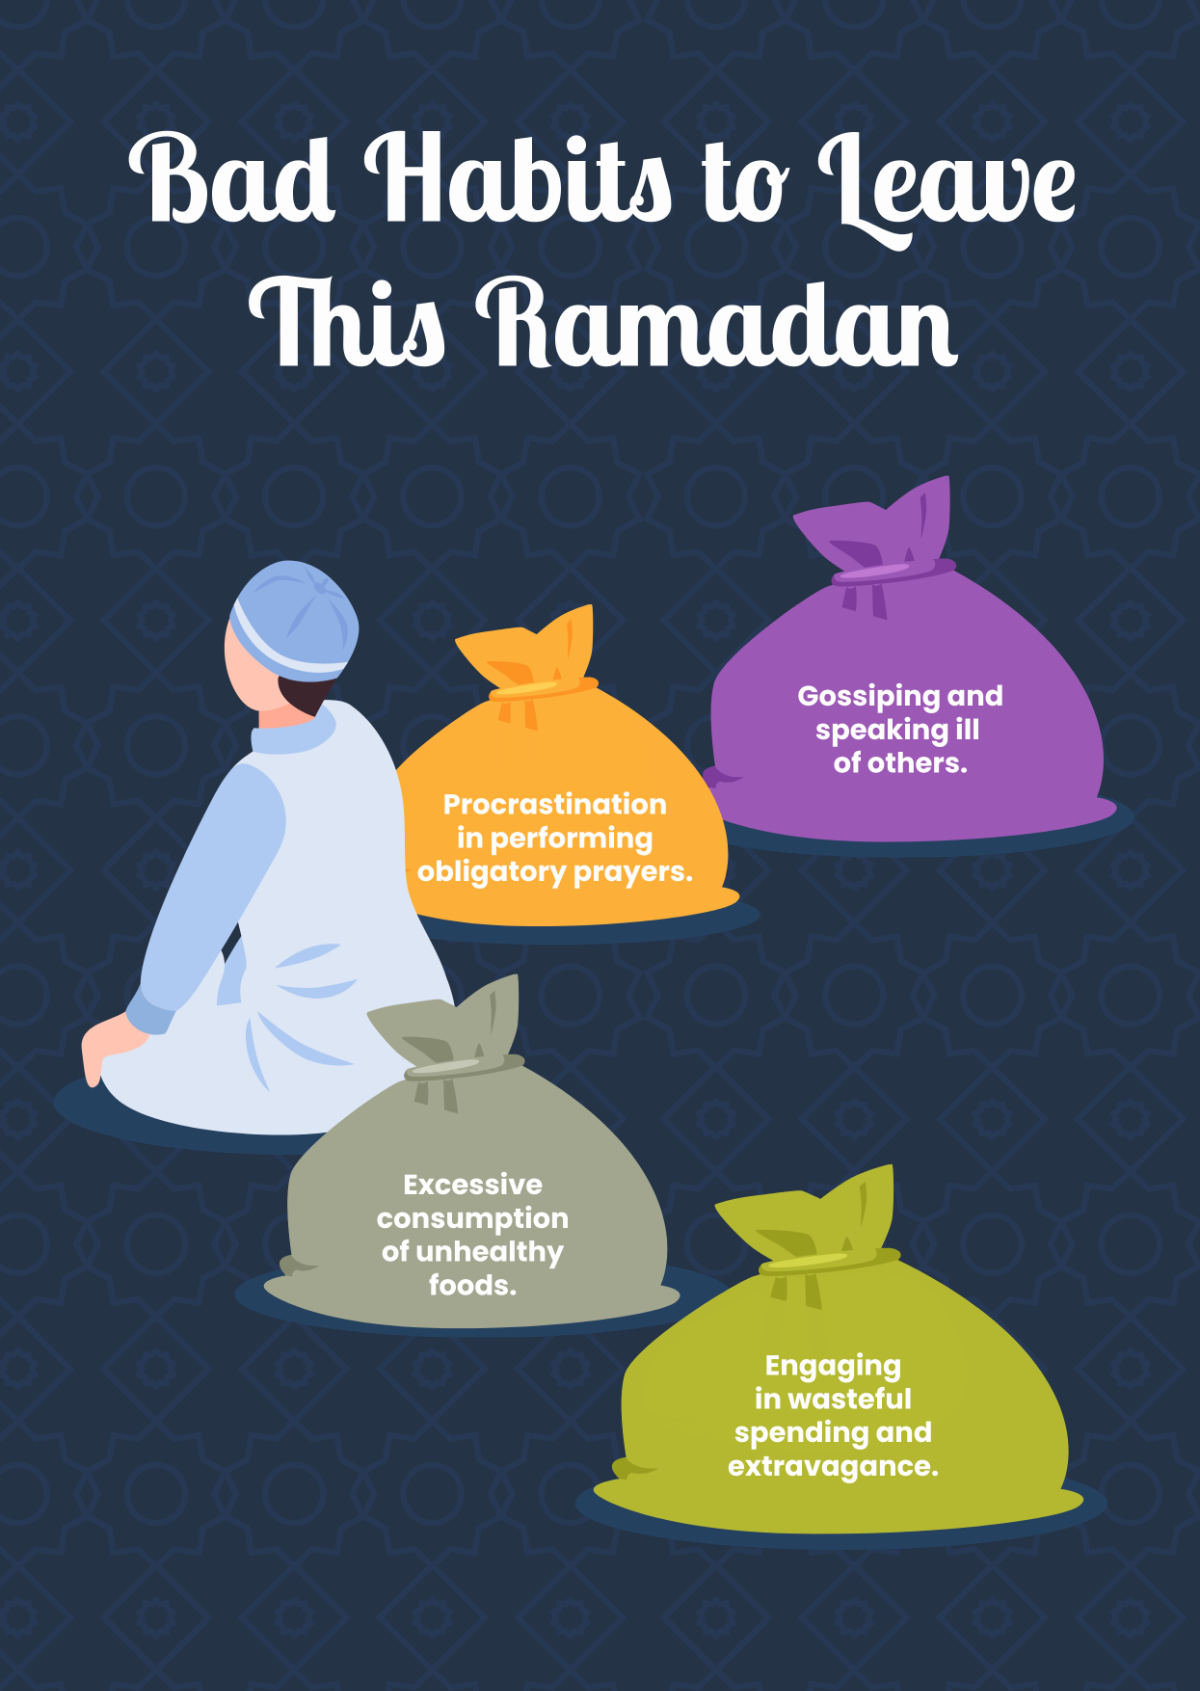 Bad habits to leave this Ramadan